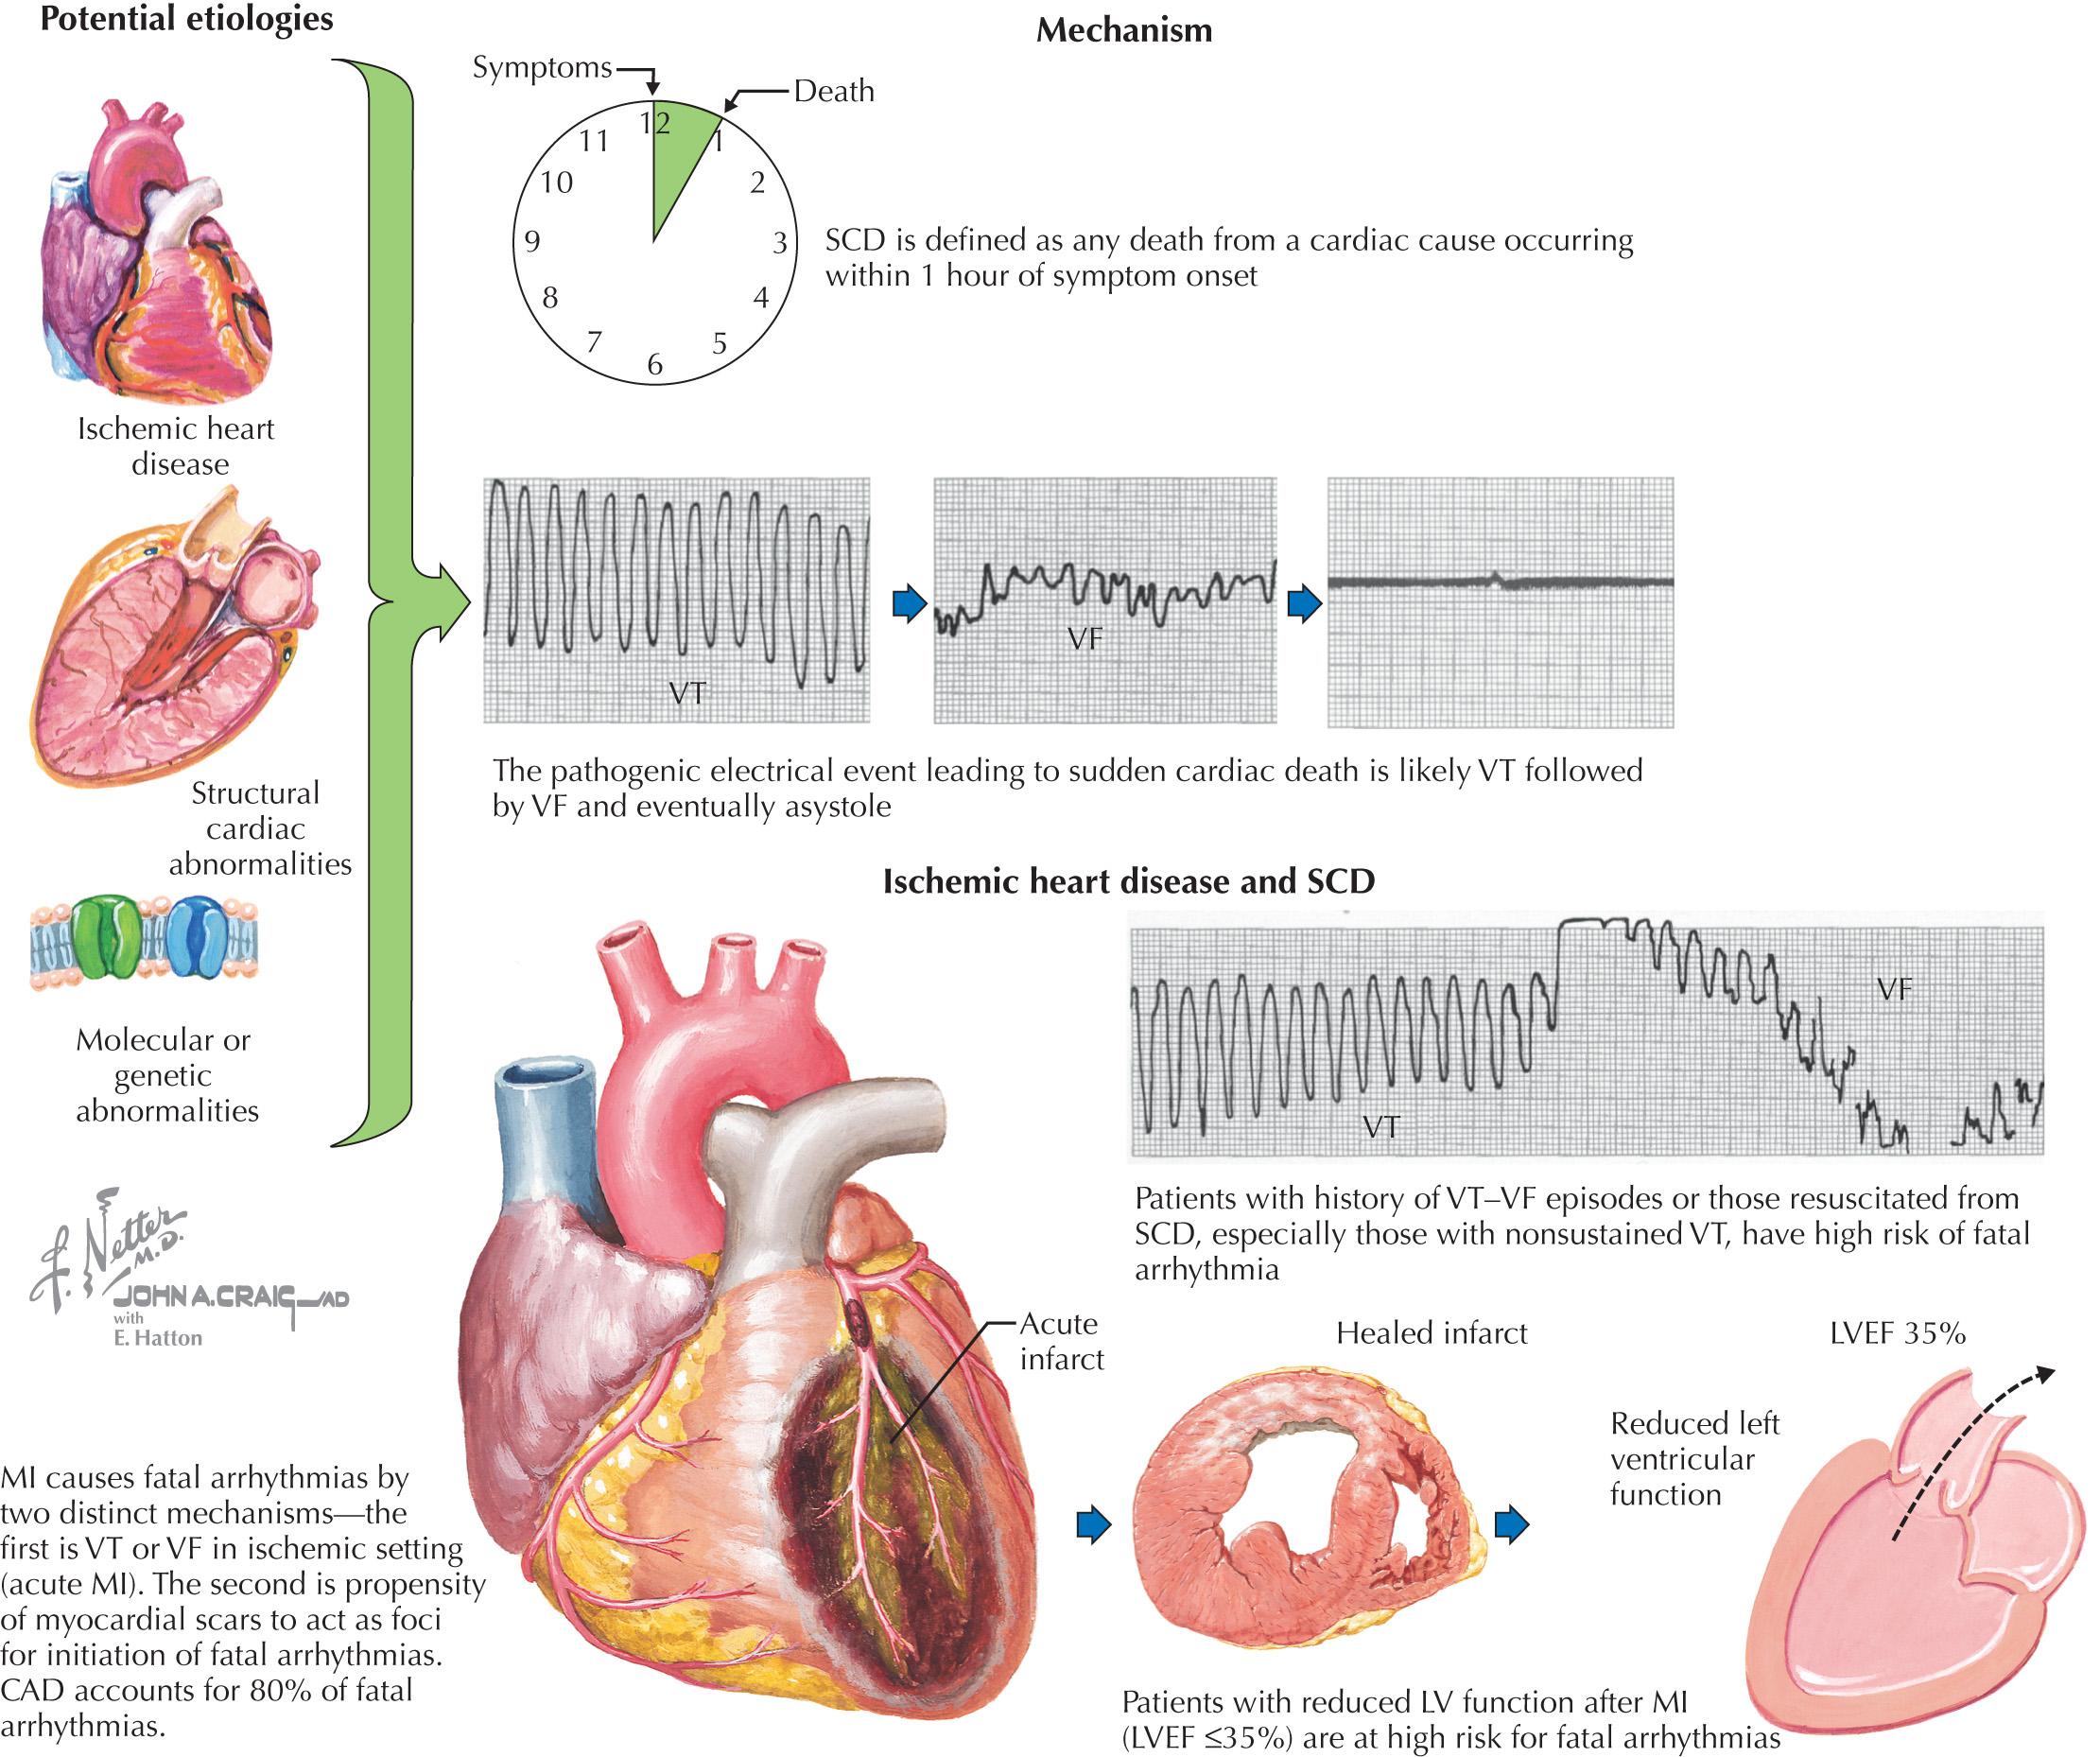 FIG 42.2, Mechanisms of Sudden Cardiac Death (SCD): Ischemic Heart Disease.